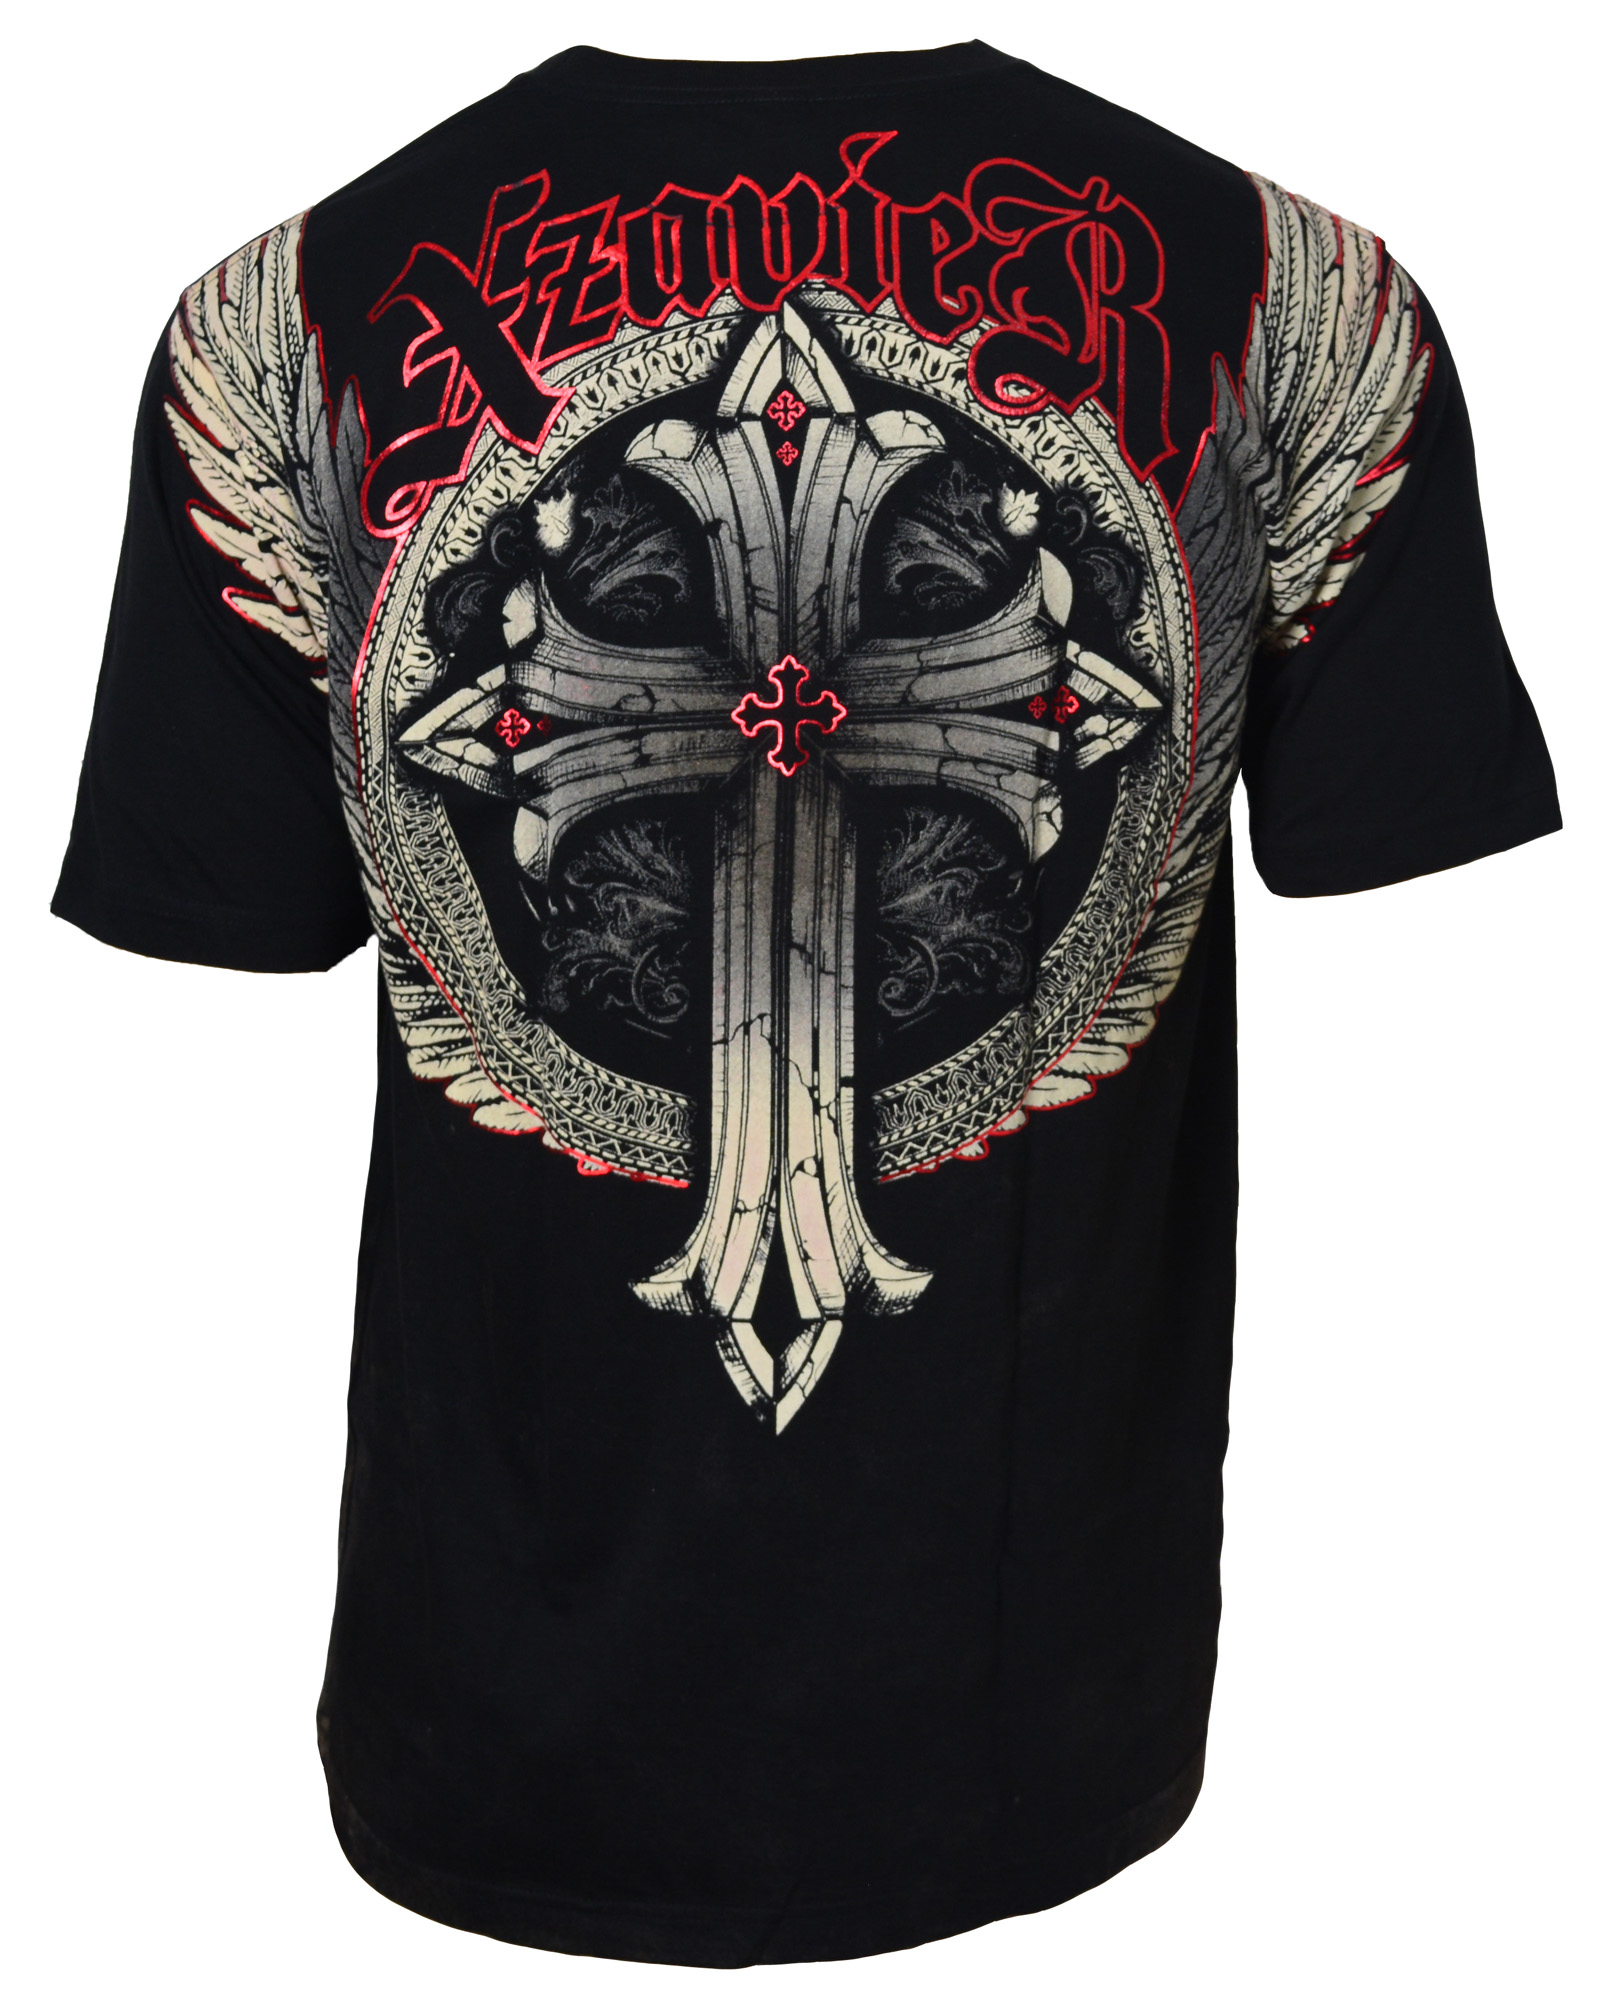 XZAVIER [King Cross] T-Shirt Biker Harley Rocker Gothic Tribal MMA ...